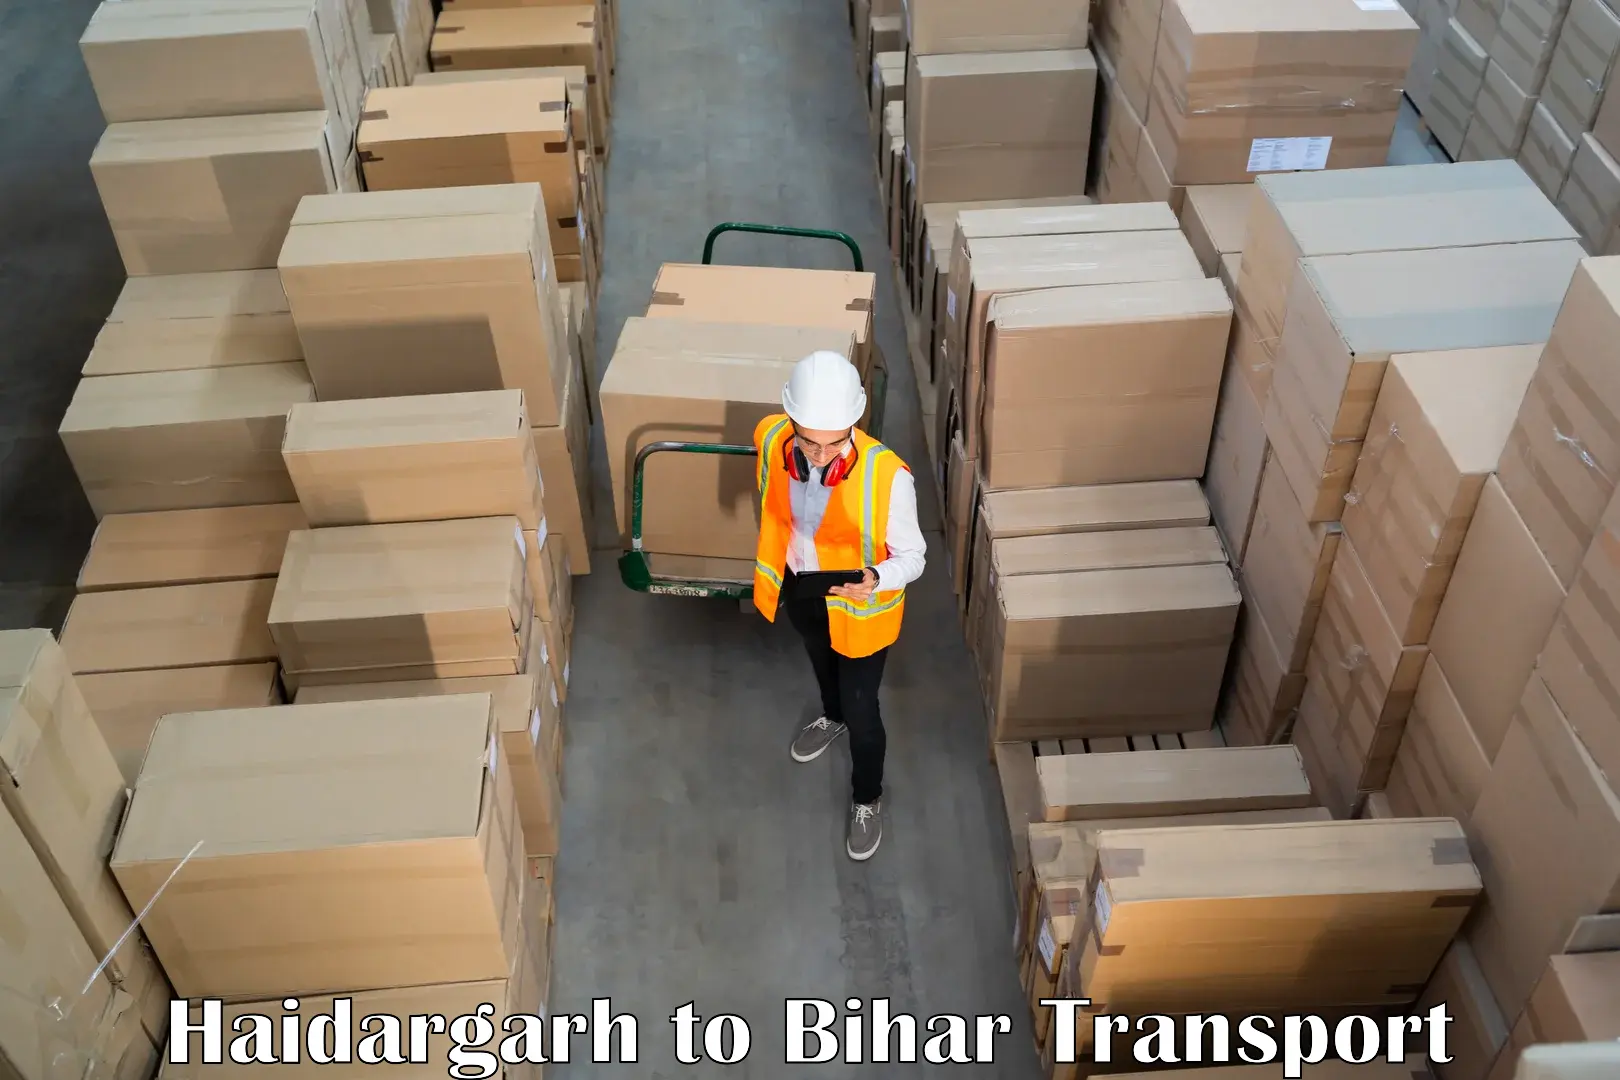 Transport services Haidargarh to Bihar